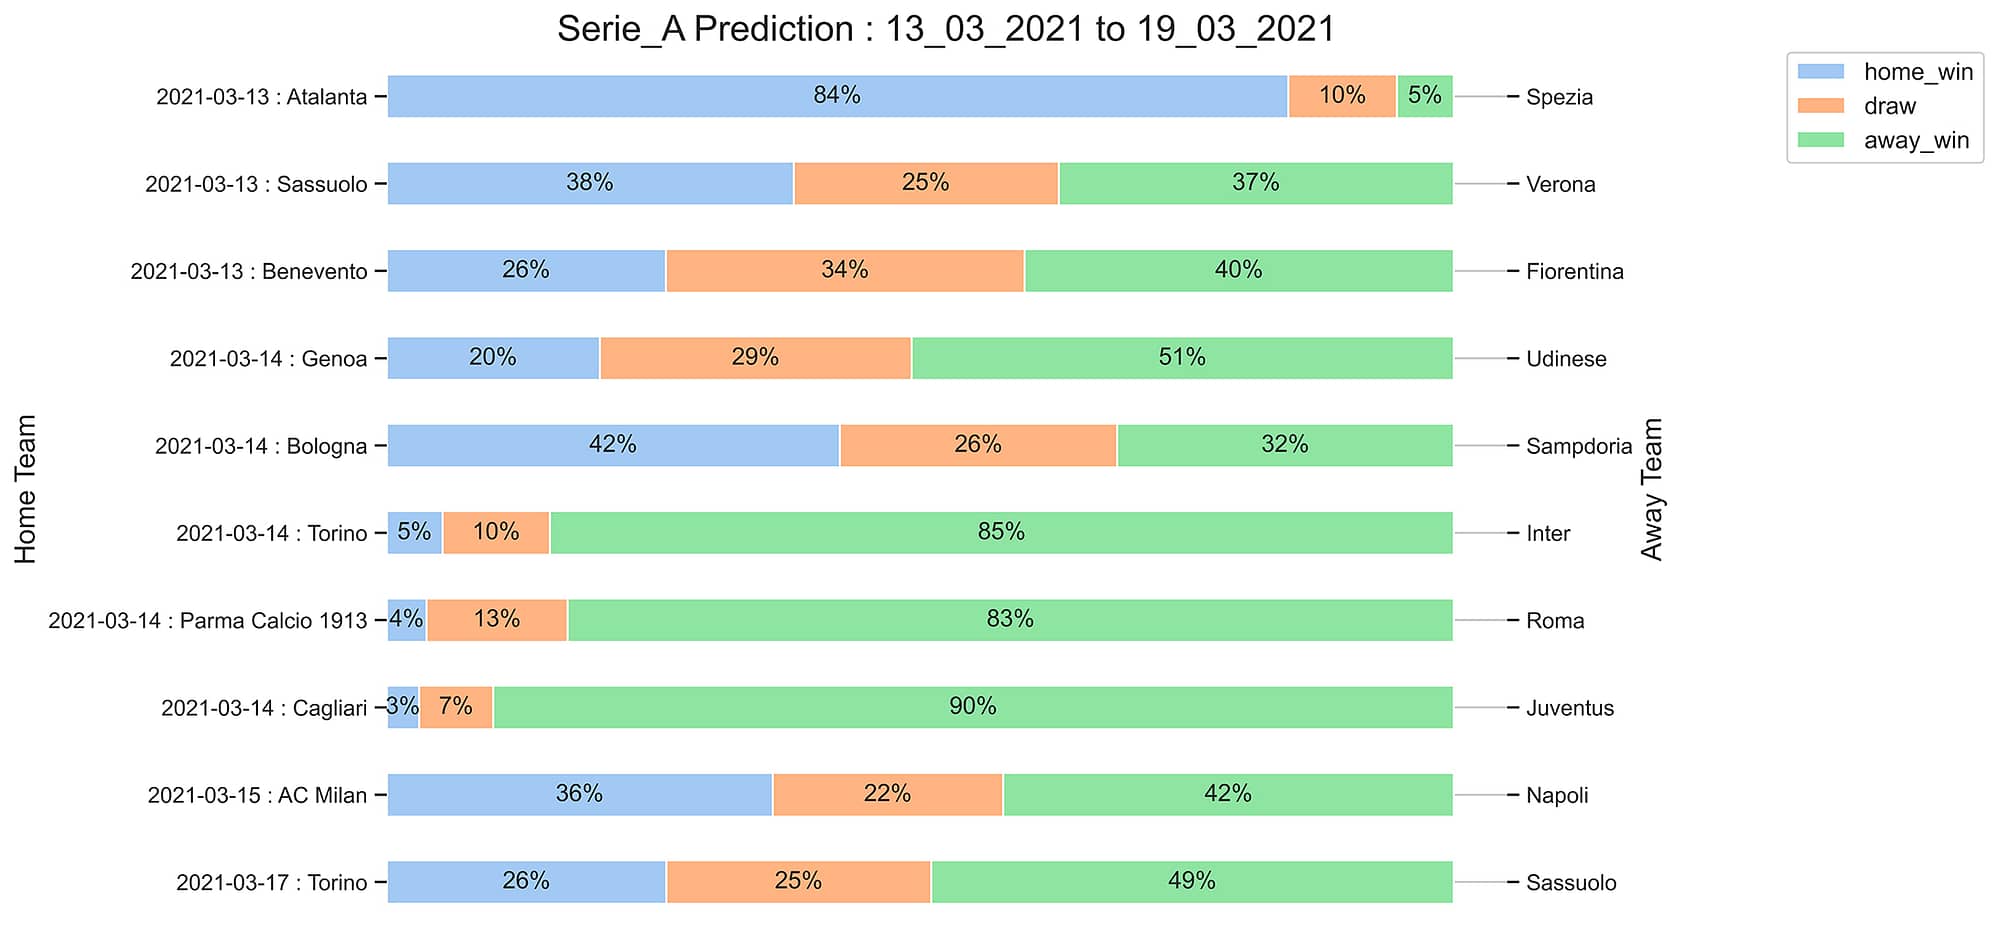 Serie_A_Prediction 13_03_2021